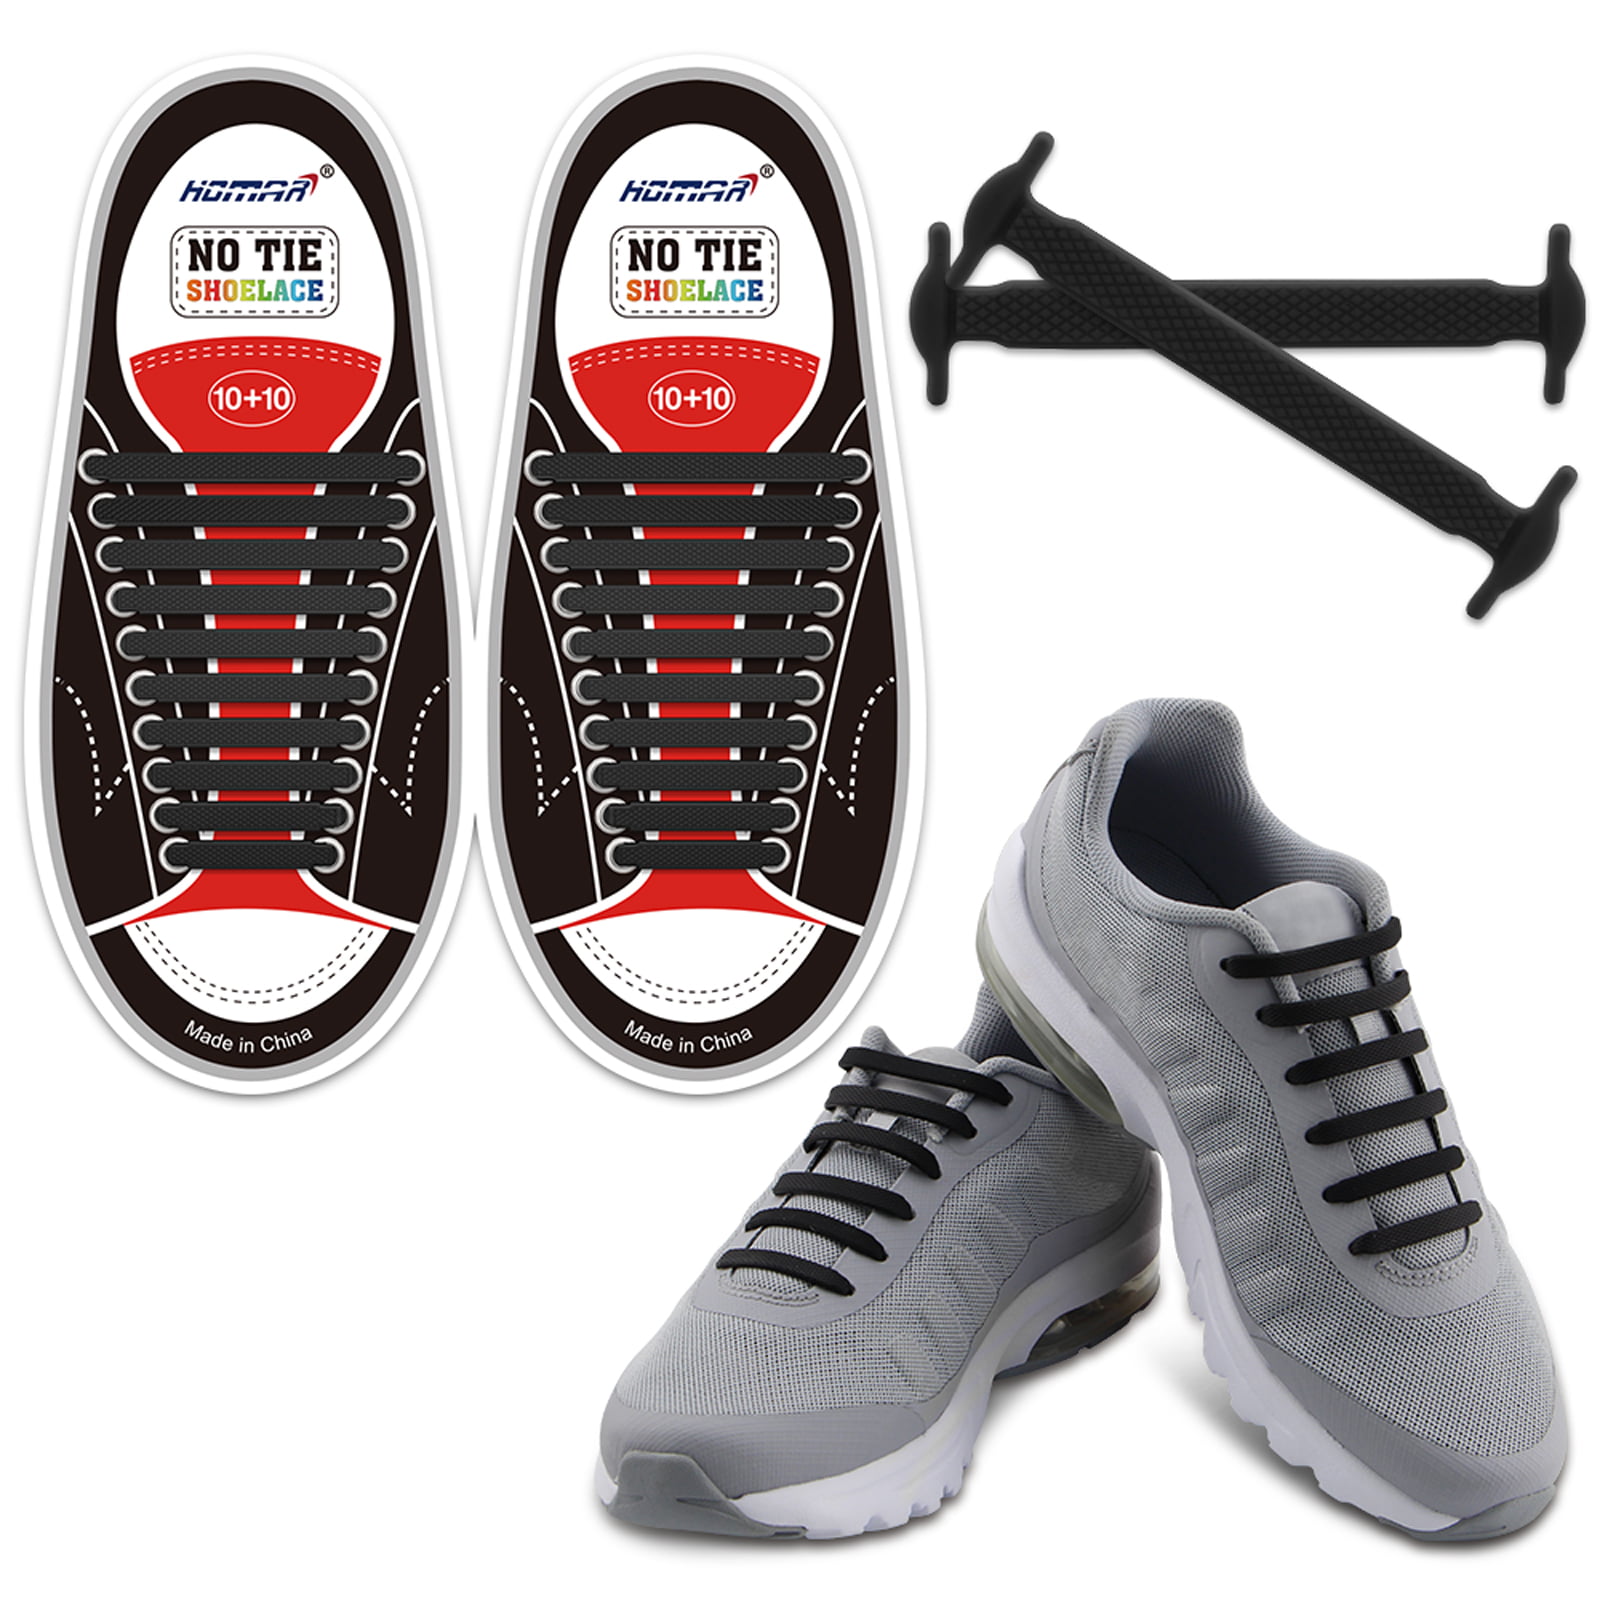 Business Black/Brown Elastic Silicone Round Shoelaces Easy No Tie Shoe Lace Set 